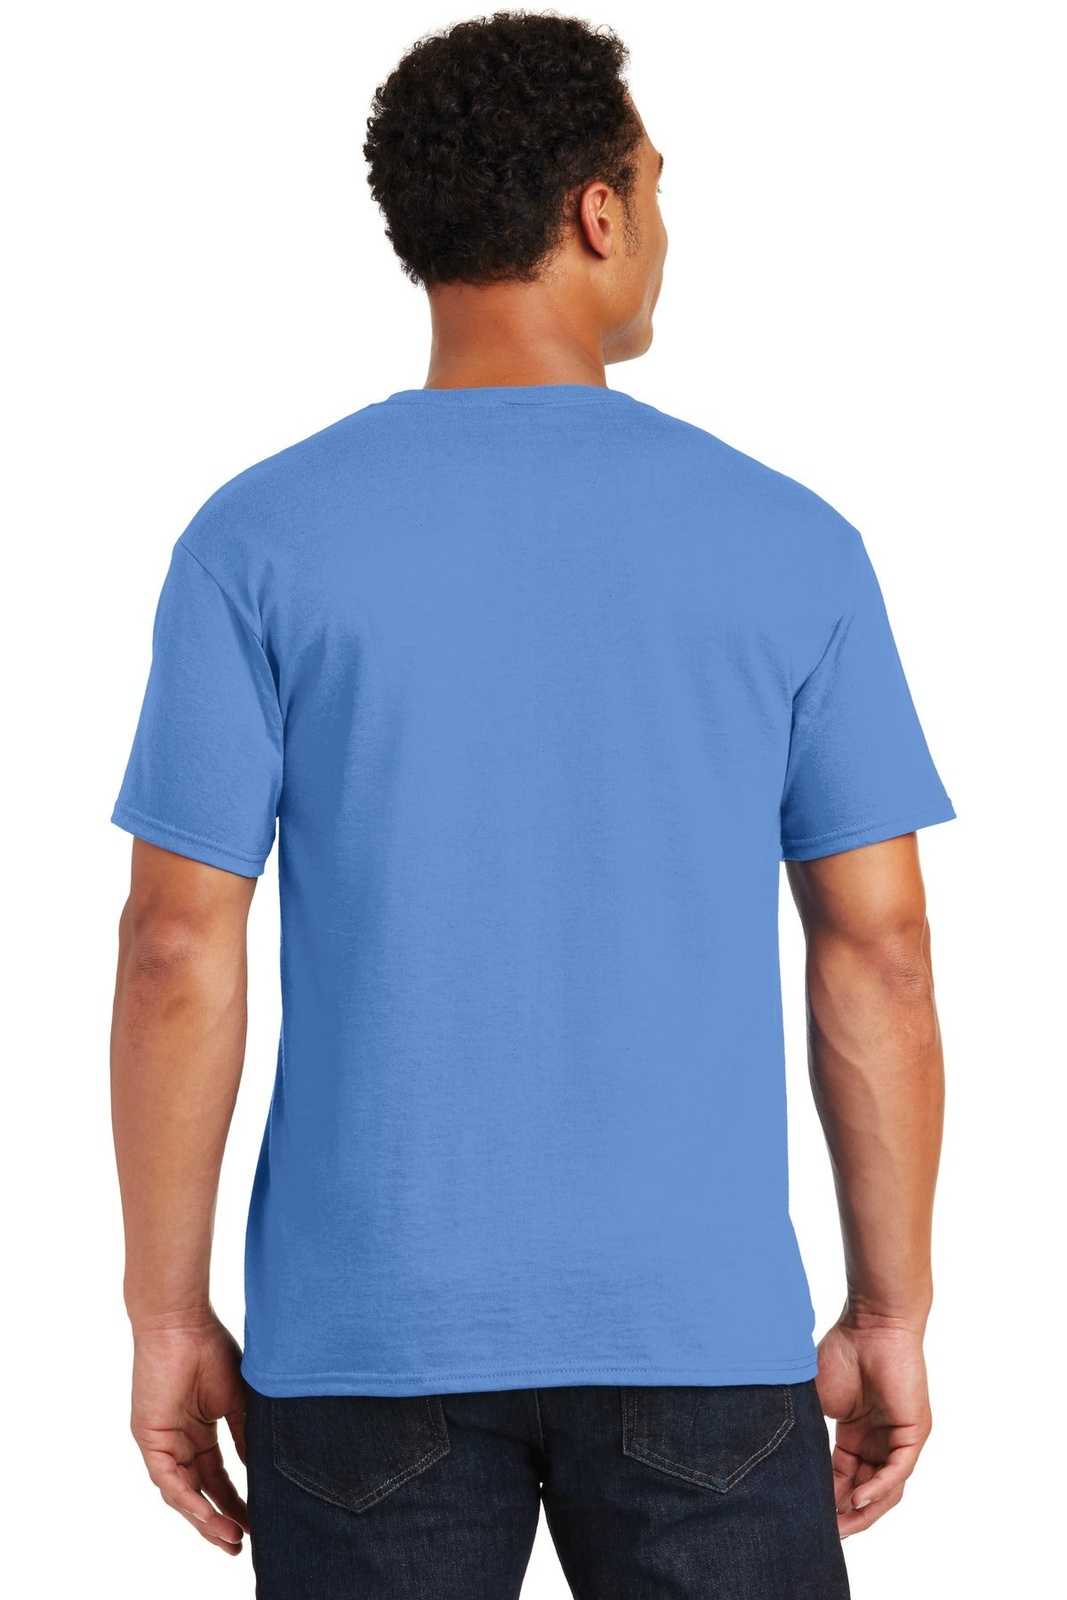 Jerzees 29M Dri-Power Active 50/50 Cotton/Poly T-Shirt - Columbia Blue - HIT a Double